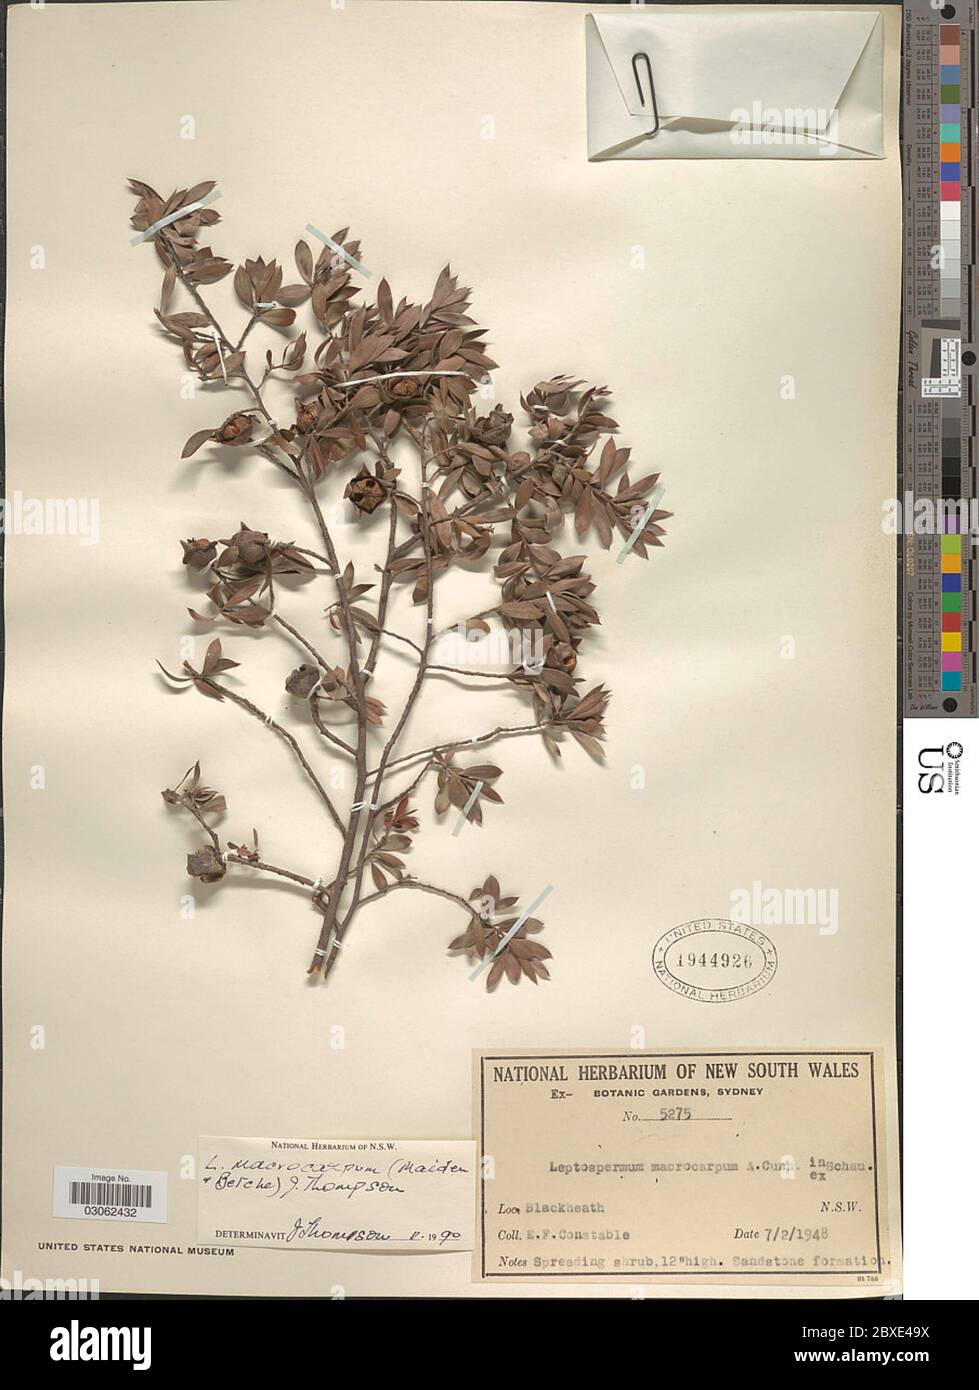 Leptospermum macrocarpum Maiden Betche Joy Thomps Leptospermum macrocarpum Maiden Betche Joy Thomps. Stock Photo